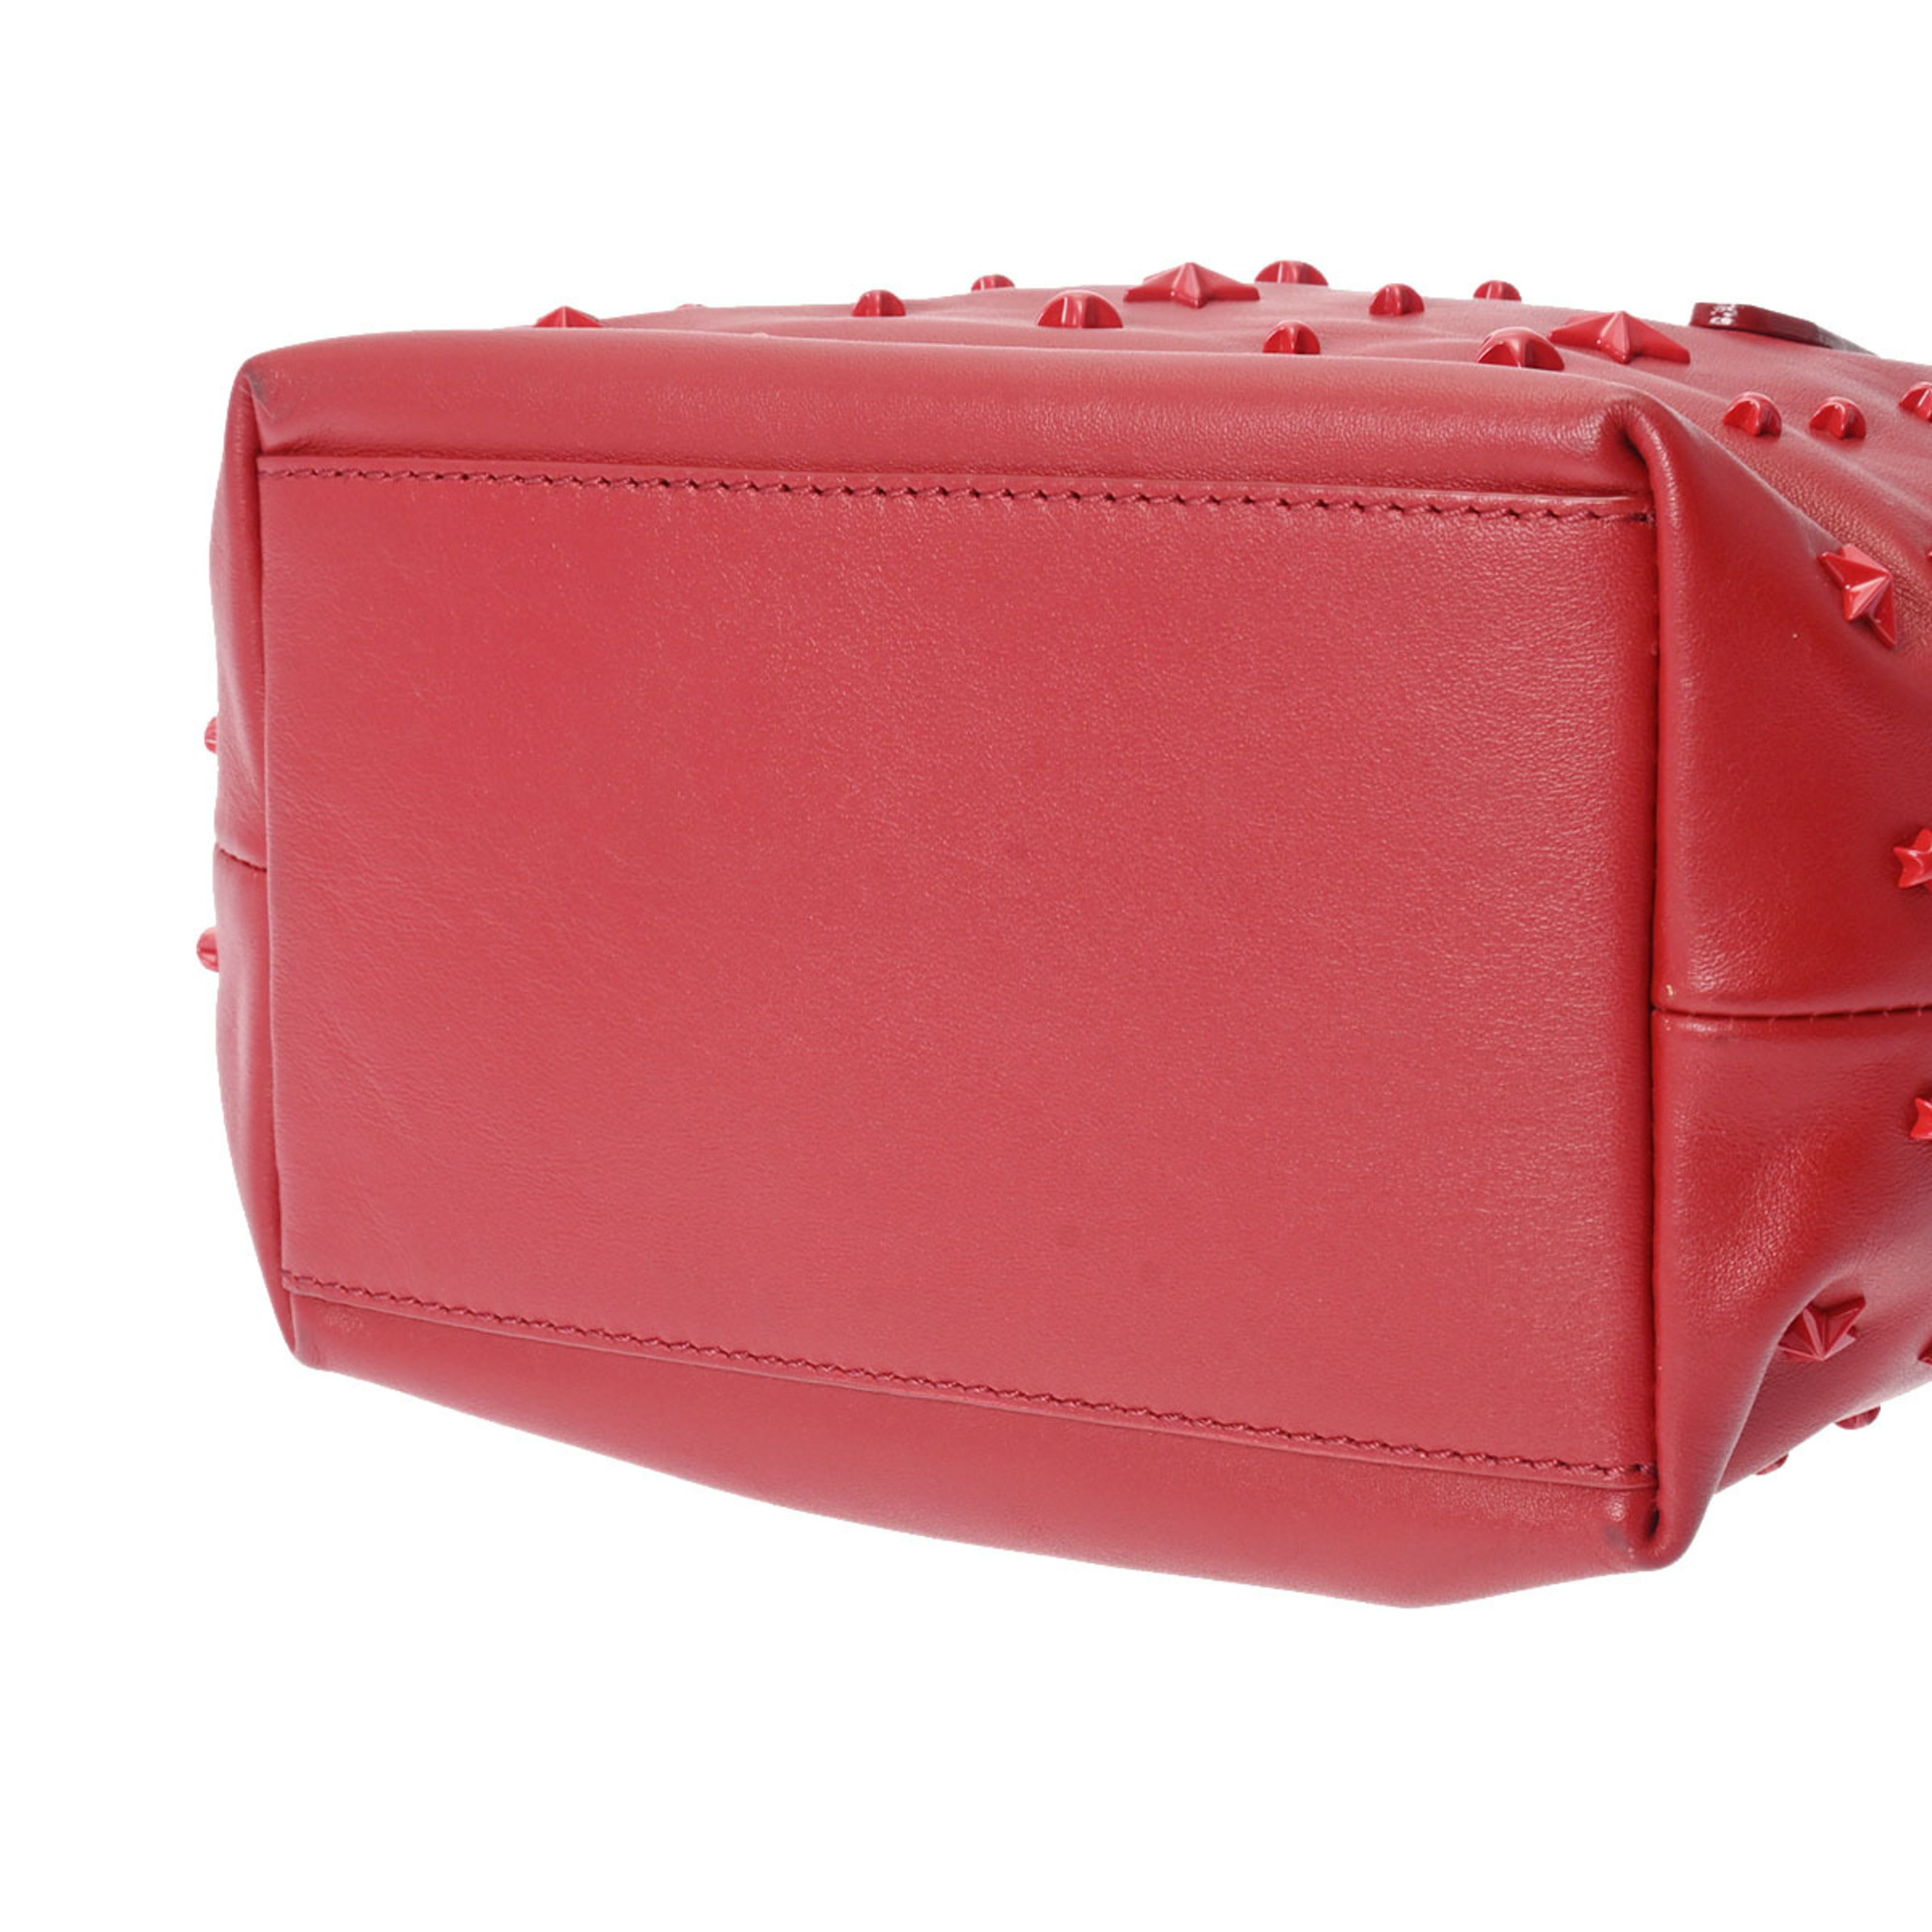 JIMMY CHOO Sarah Star Studded Red Women's Leather Handbag